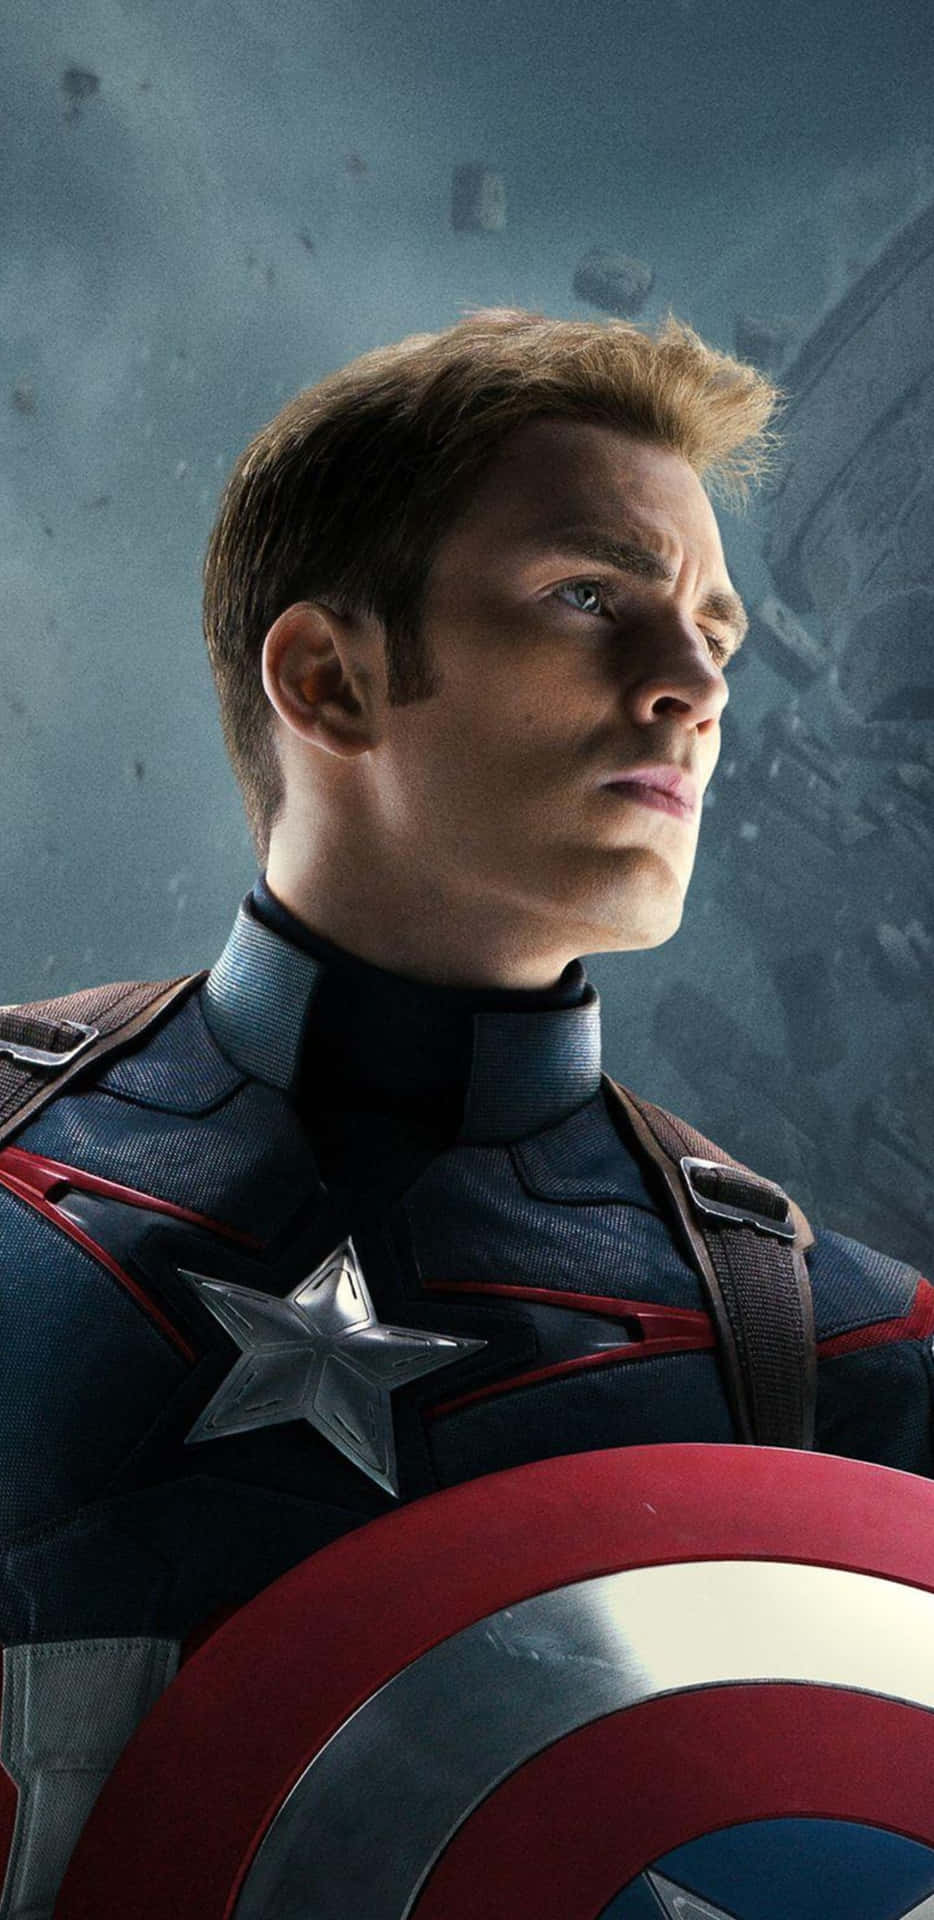 Pixel3xl Hintergrundbild Von Captain America Aus Avengers: Age Of Ultron.